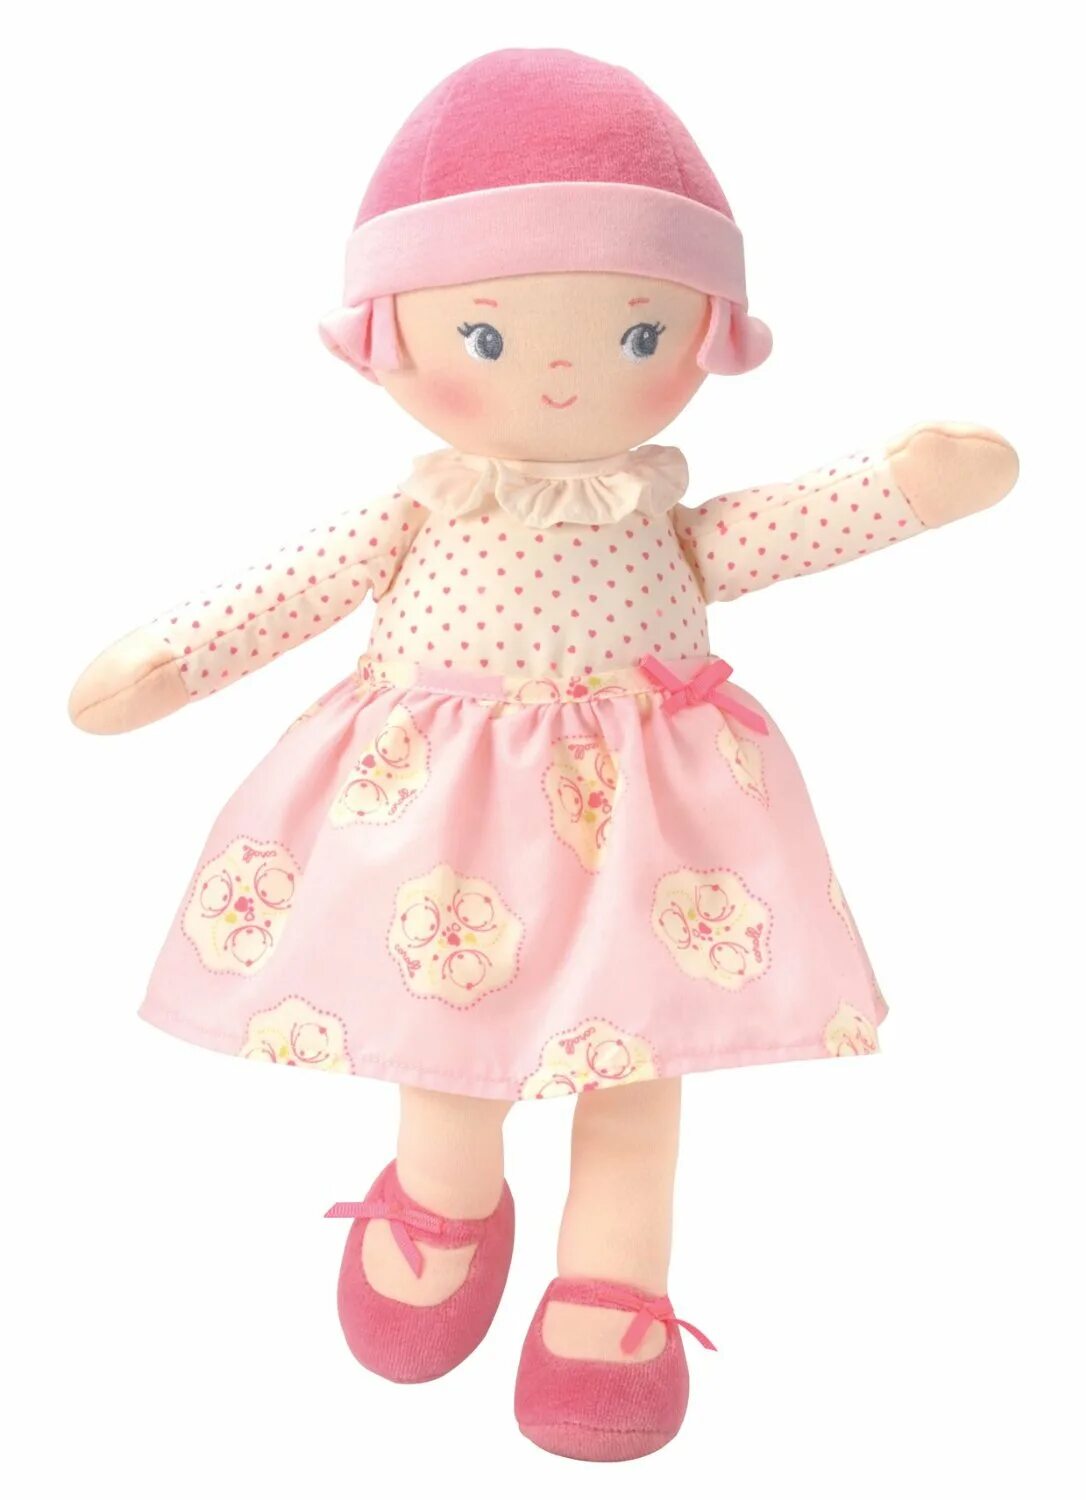 Розовая куколка. Кукла Corolle. Кукла John Lewis. Пинк долл куклы. Розовая кукла игрушка.